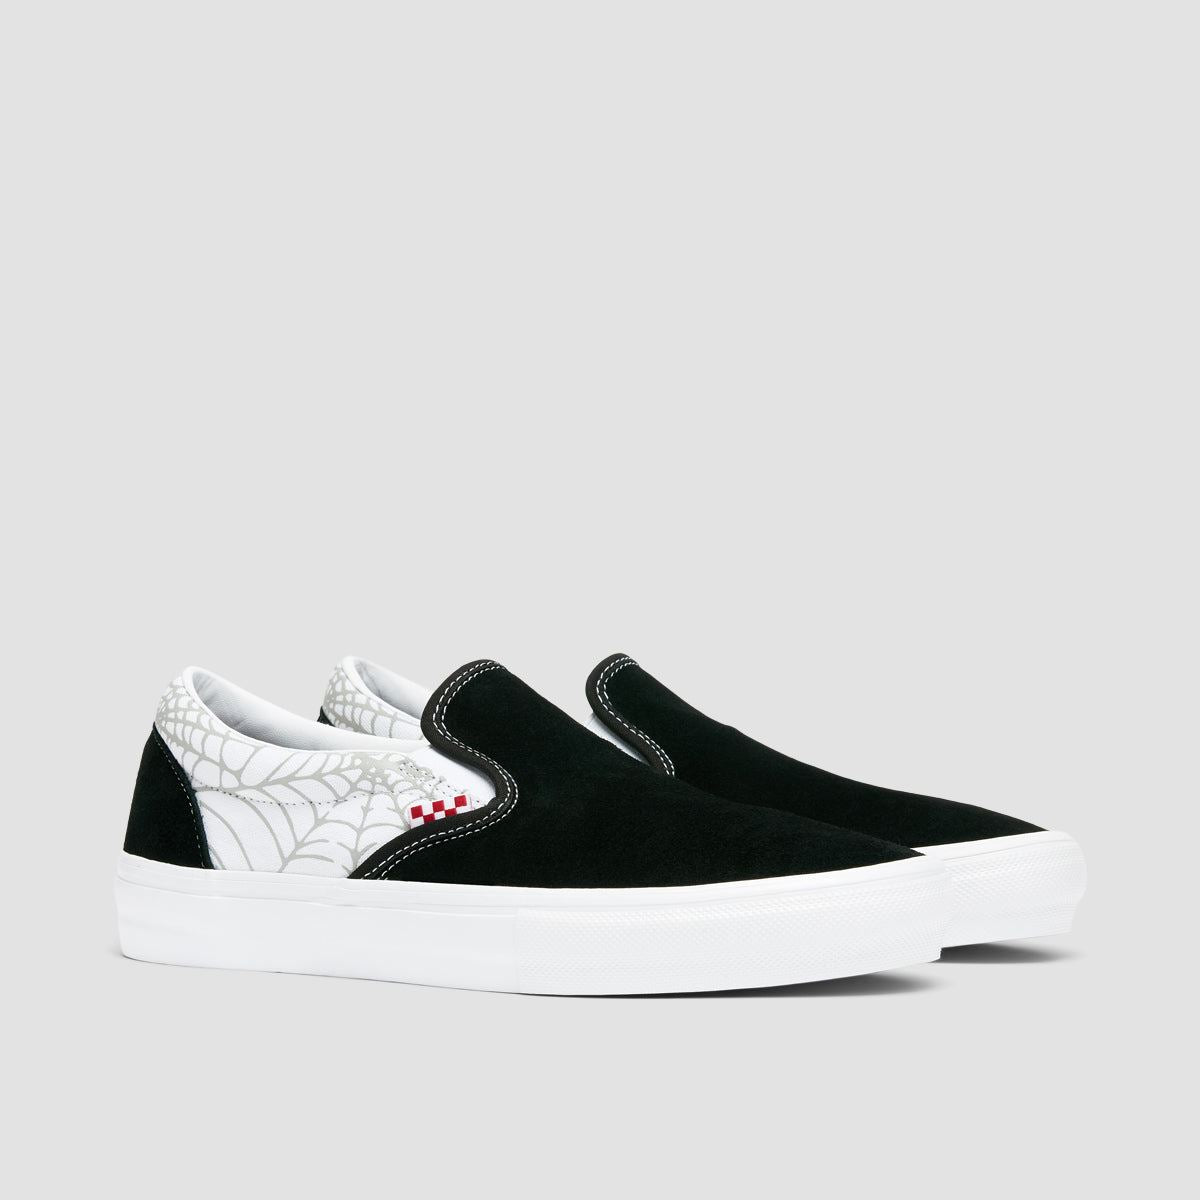 Vans Skate Slip-On Shoes - Black Widow Spider Black/White/Red